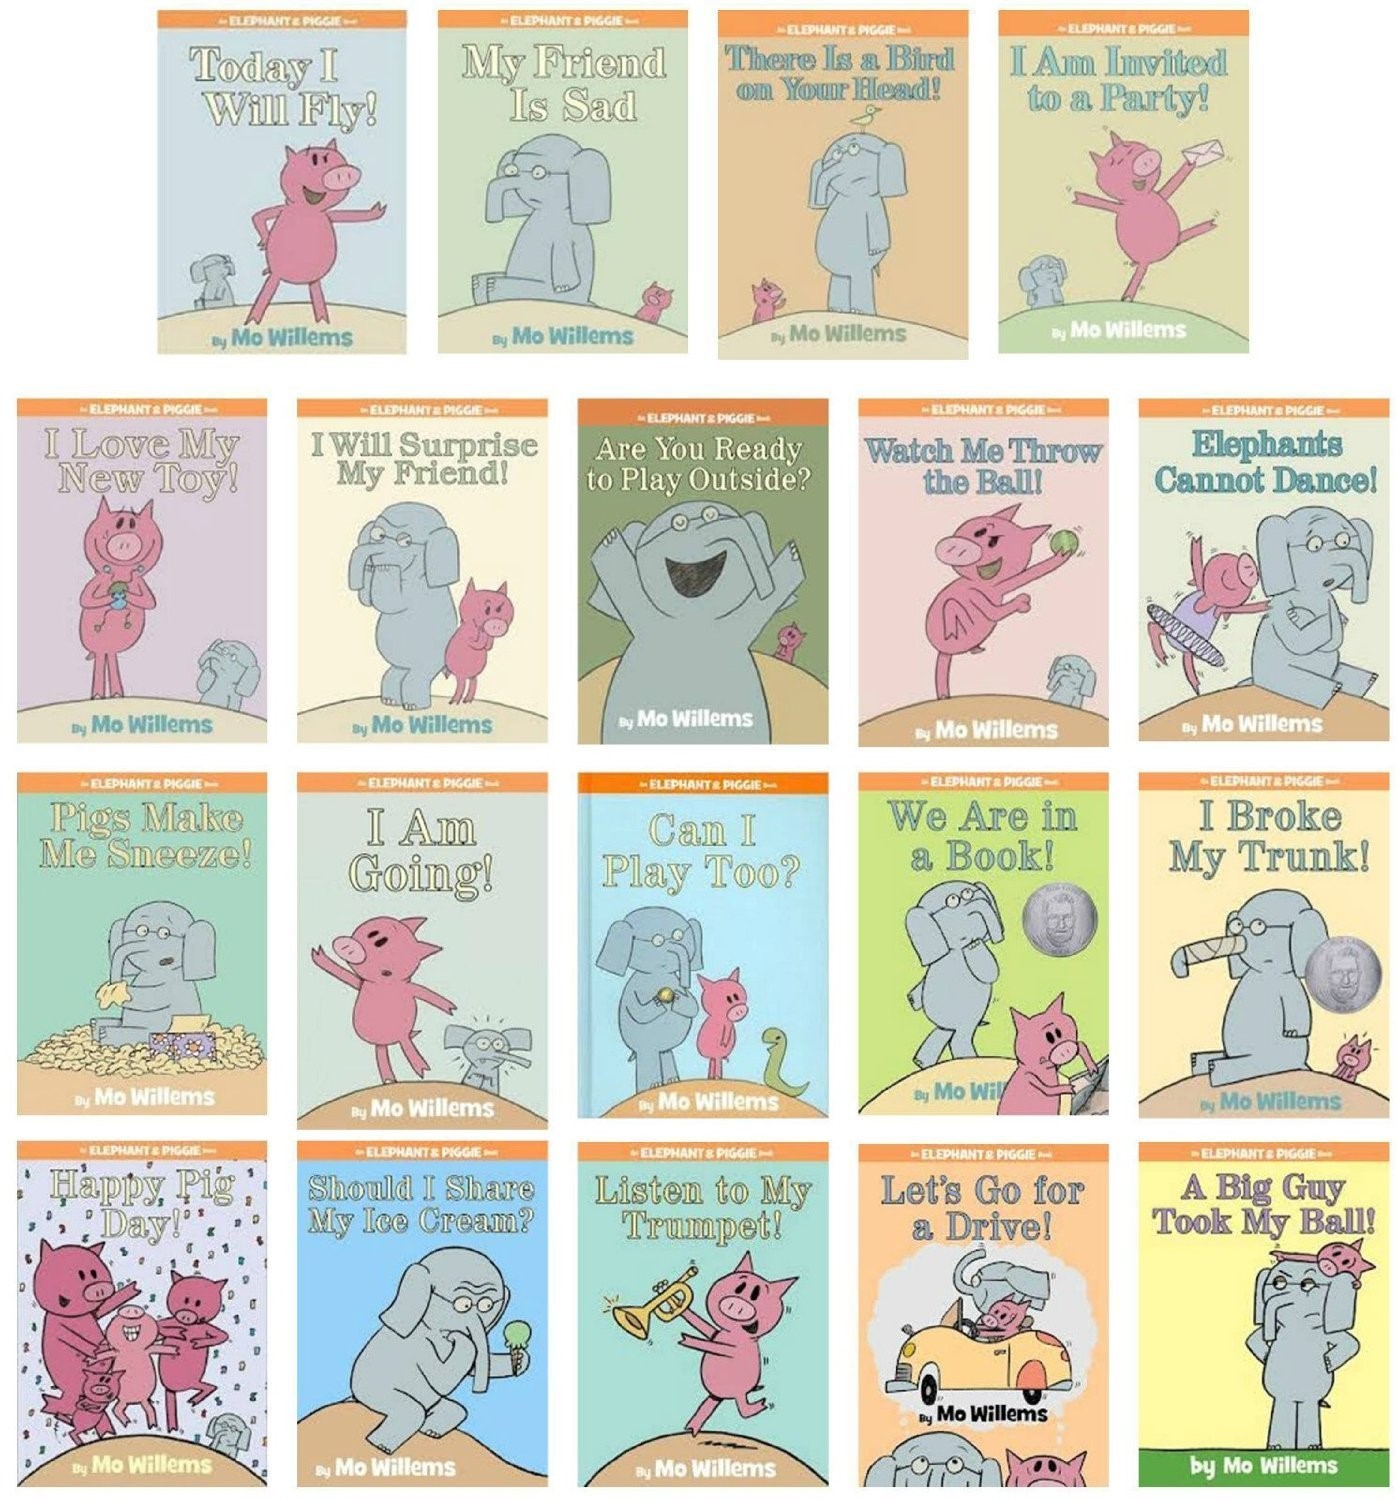 An Elephant And Piggie Book| 25 Books | Bản Nhập Khẩu